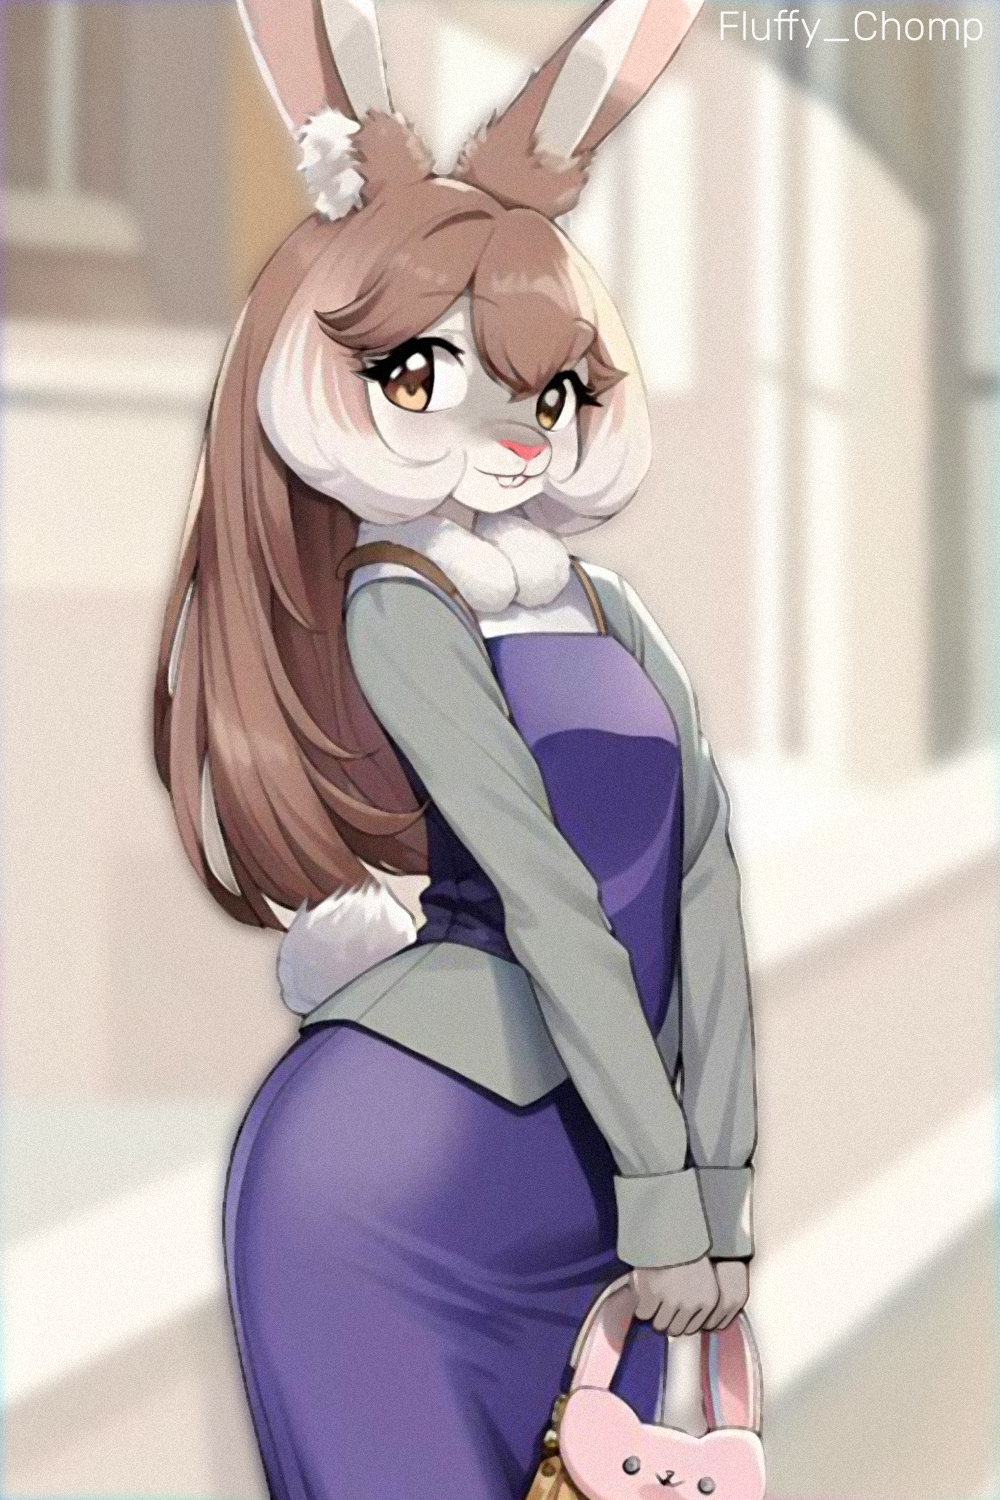 Anime Bunny Girl HD Wallpapers - Wallpaper Cave